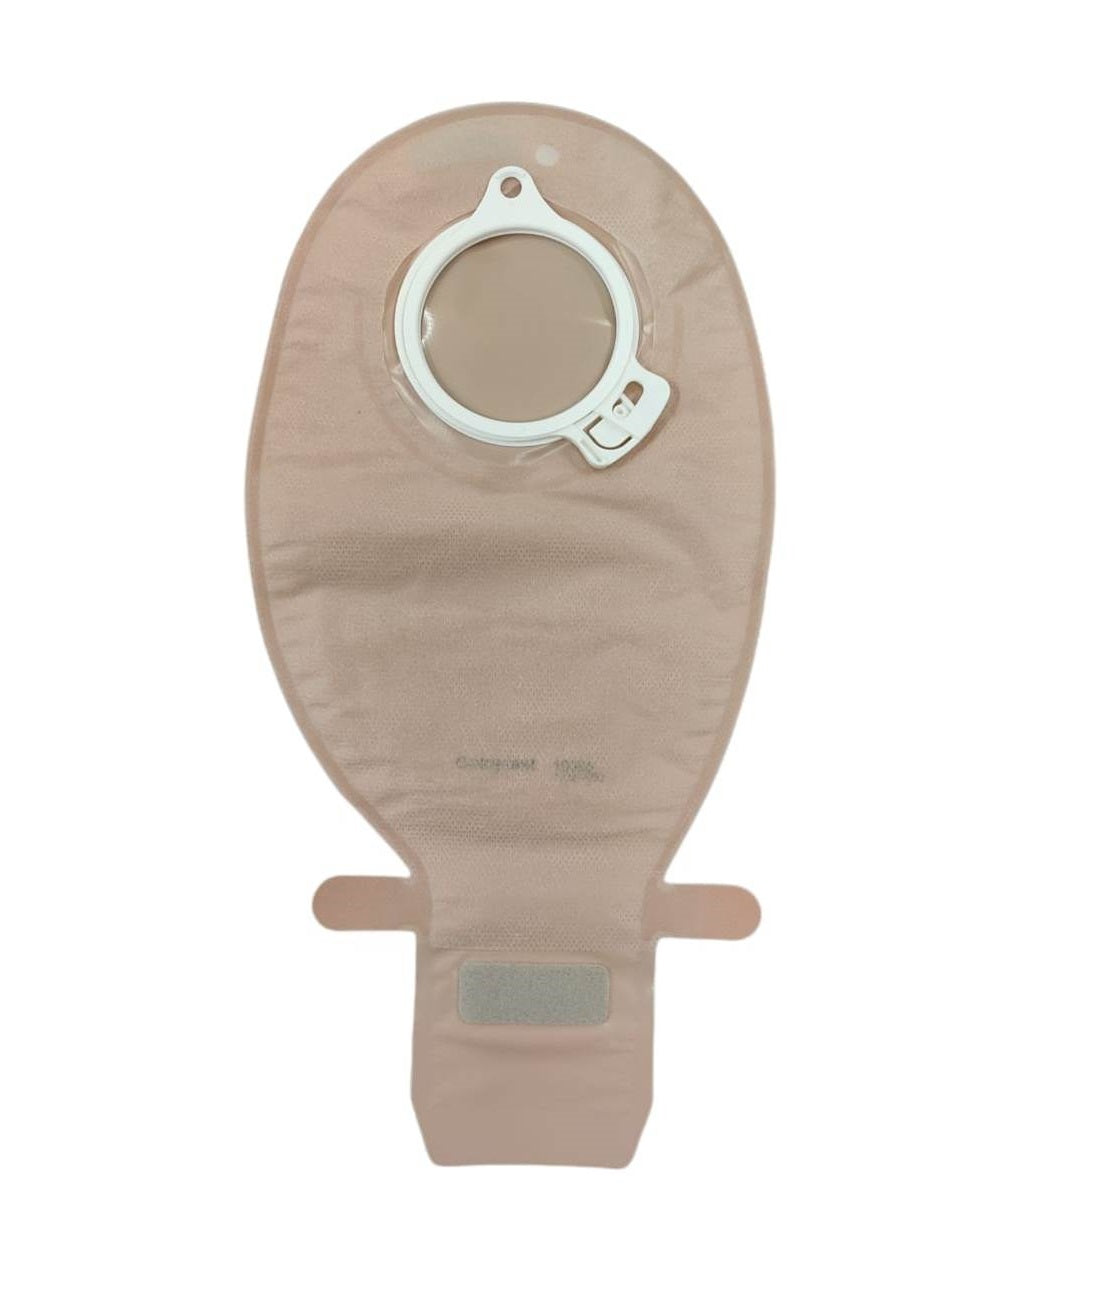 Coloplast Ostomy Bag Sensura 10365 50mm 2-Piece Open Opaque Maxi